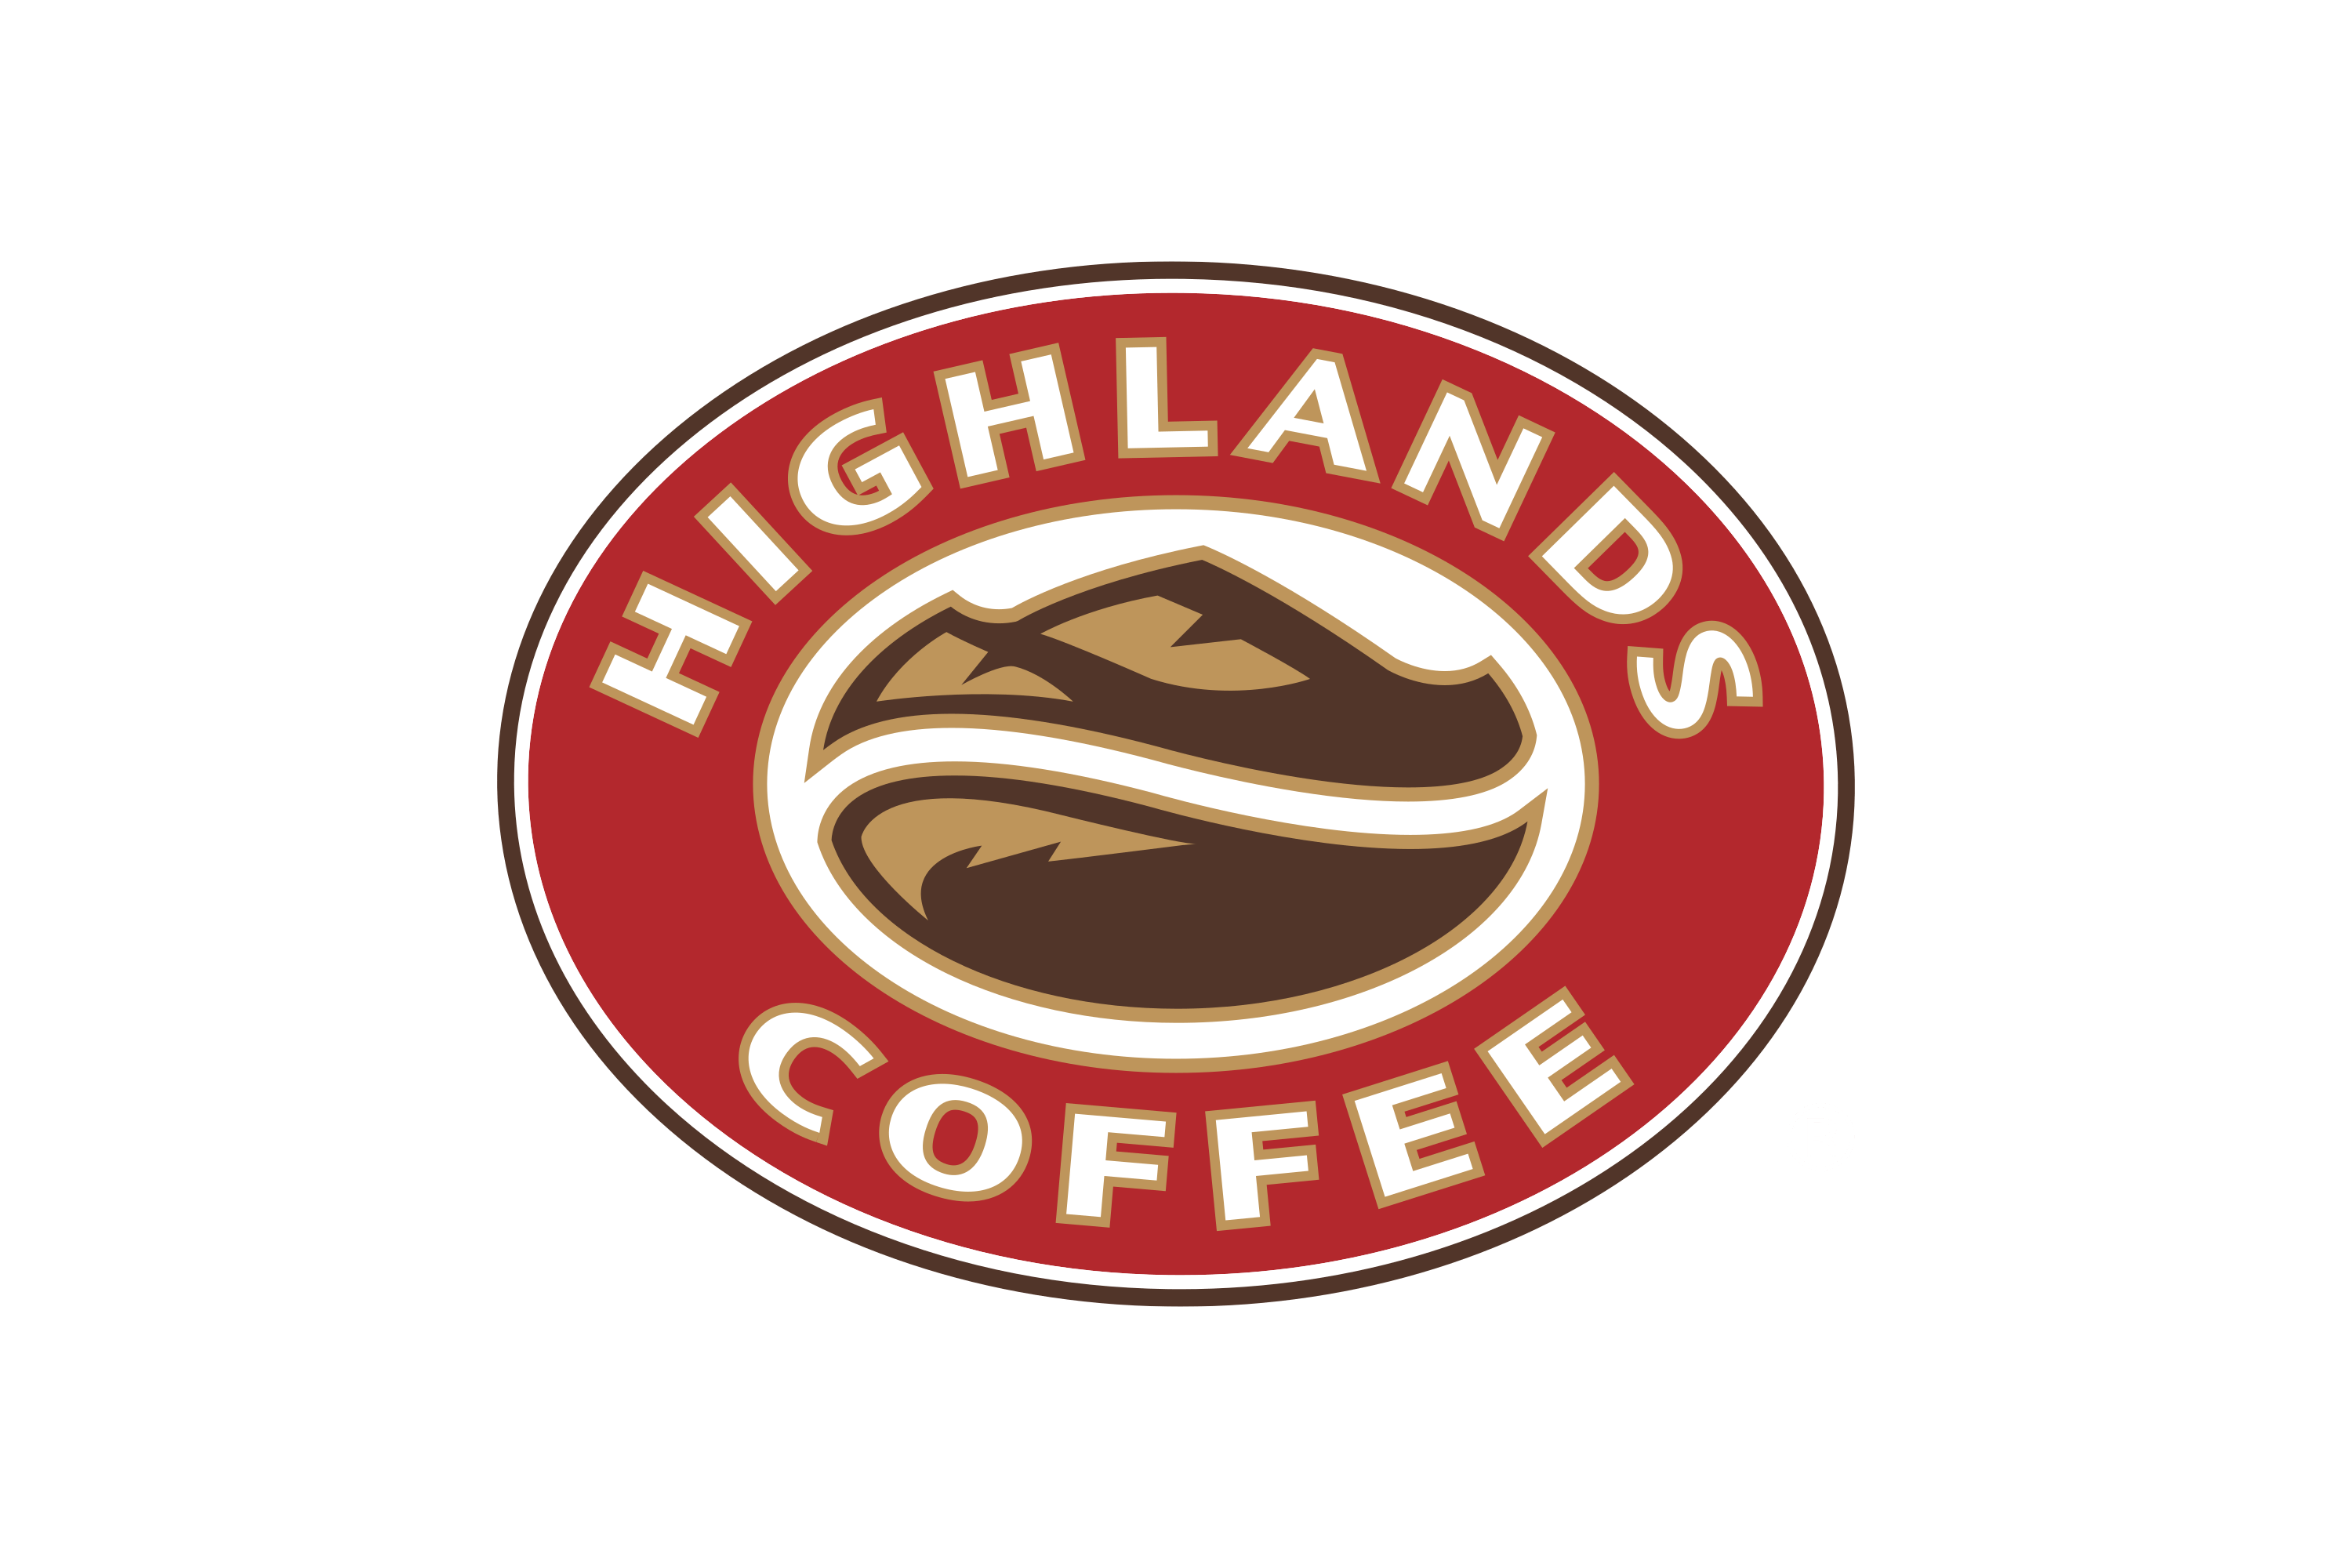 Download Highlands Coffee Logo in SVG Vector or PNG File Format ...